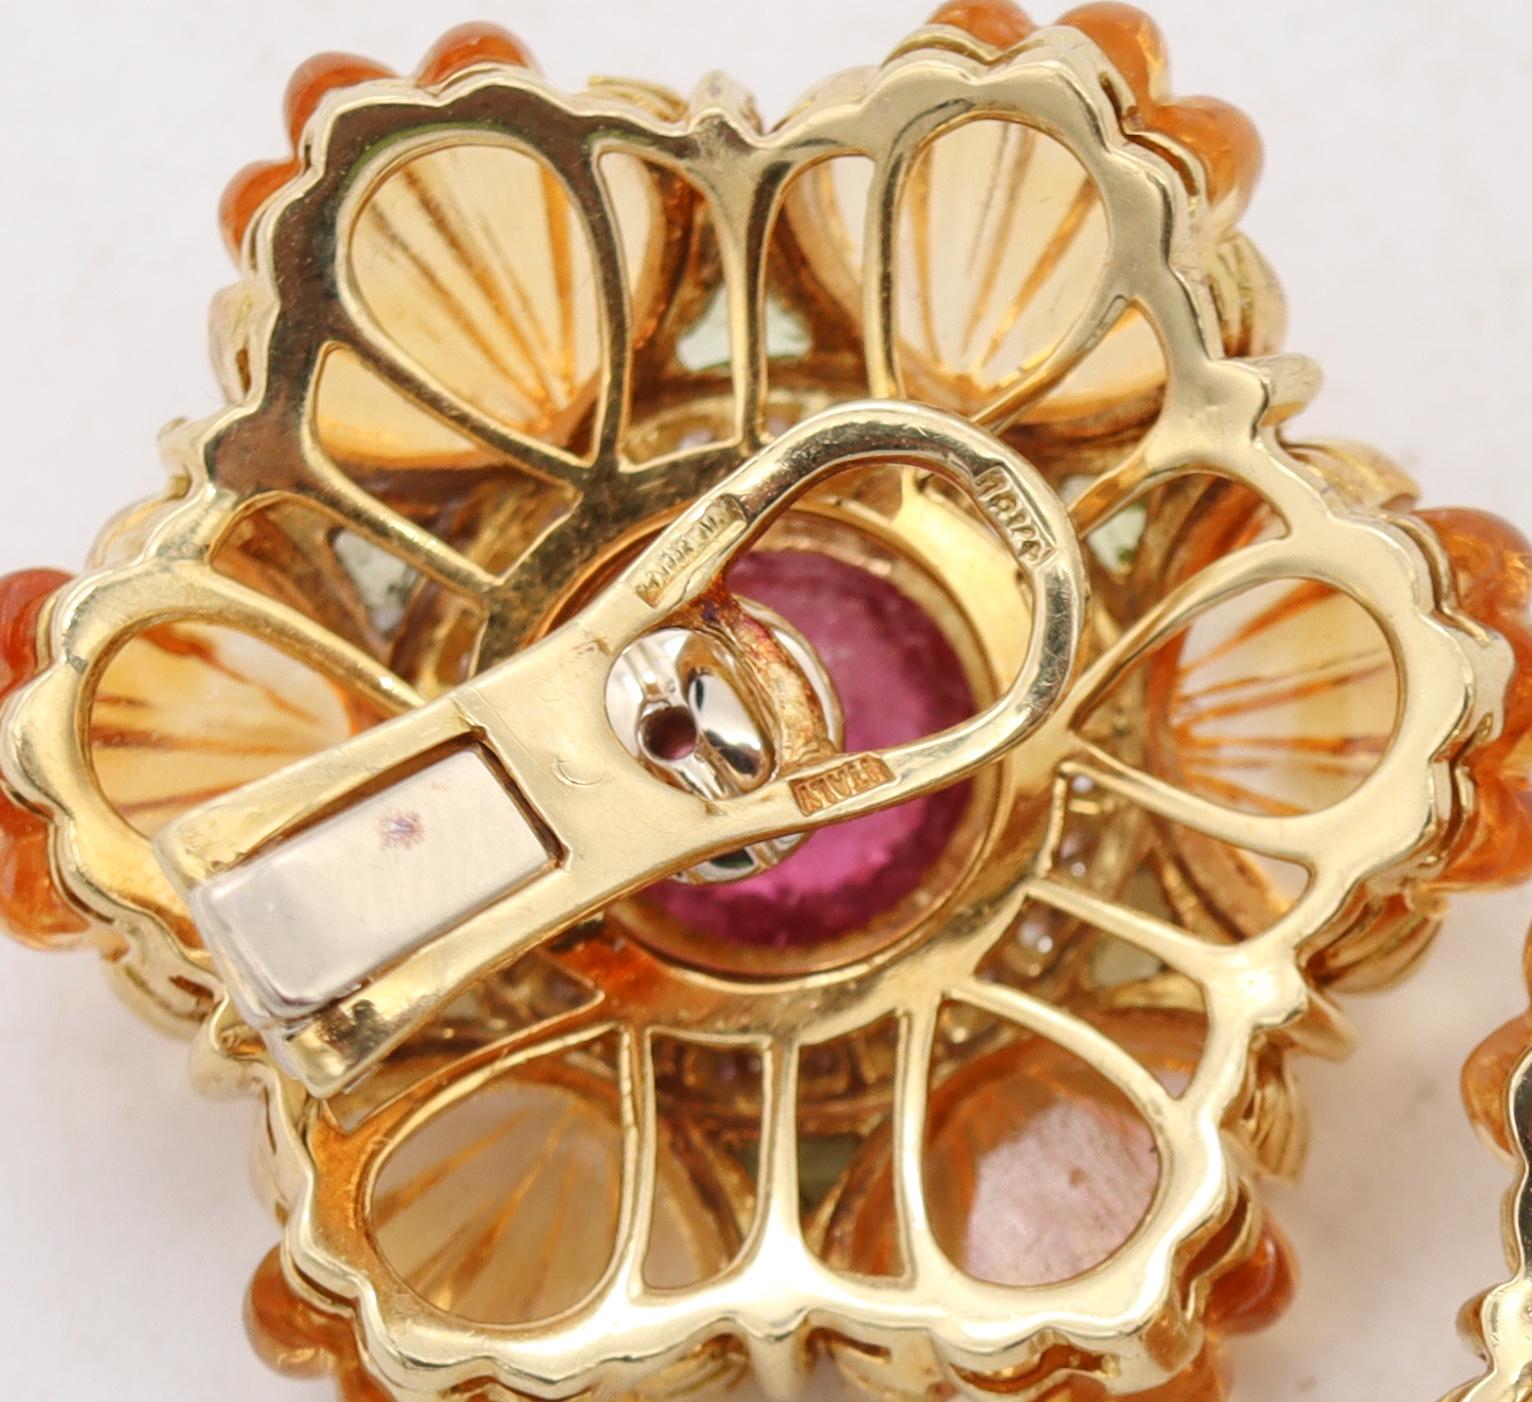 Contemporary Roberto Legnazzi Gem Set Cluster Earrings 18Kt Gold 54.37 Cts Diamond Gemstones